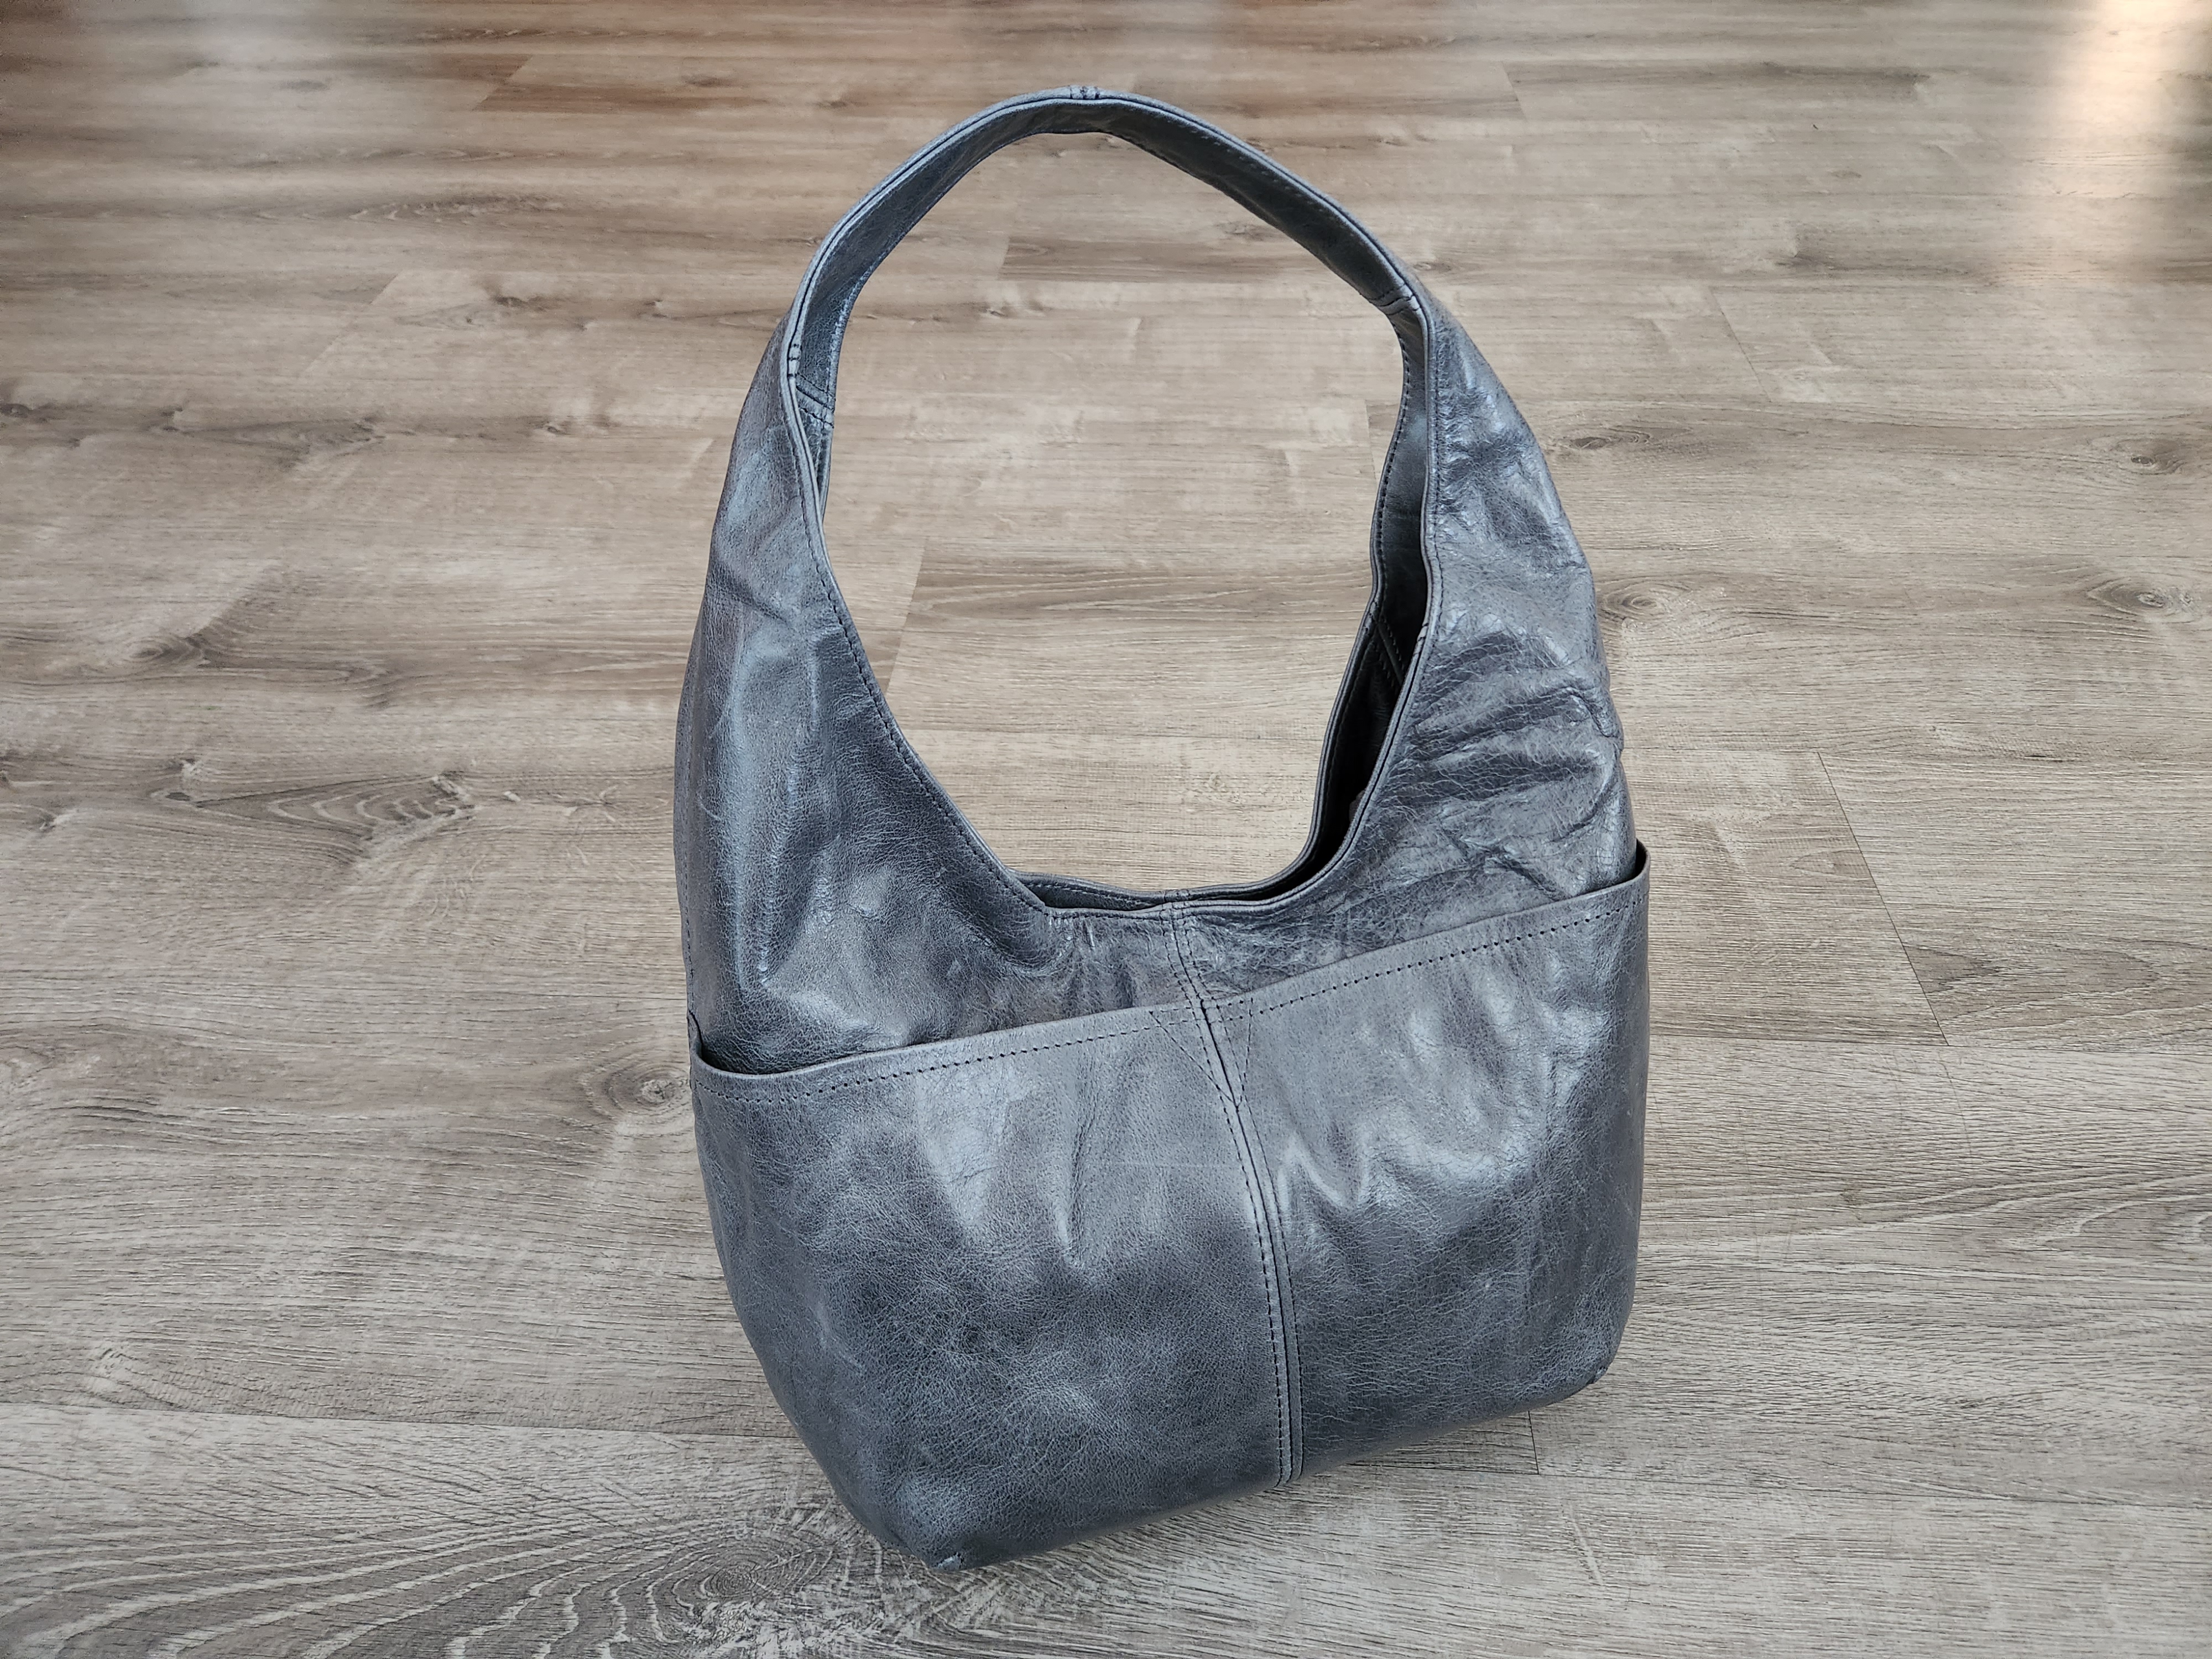 Distressed Gray Leather Hobo Bag, Boho Chic Rustic Shoulder Handbag, Alicia  - Fgalaze Genuine Leather Bags & Accessories